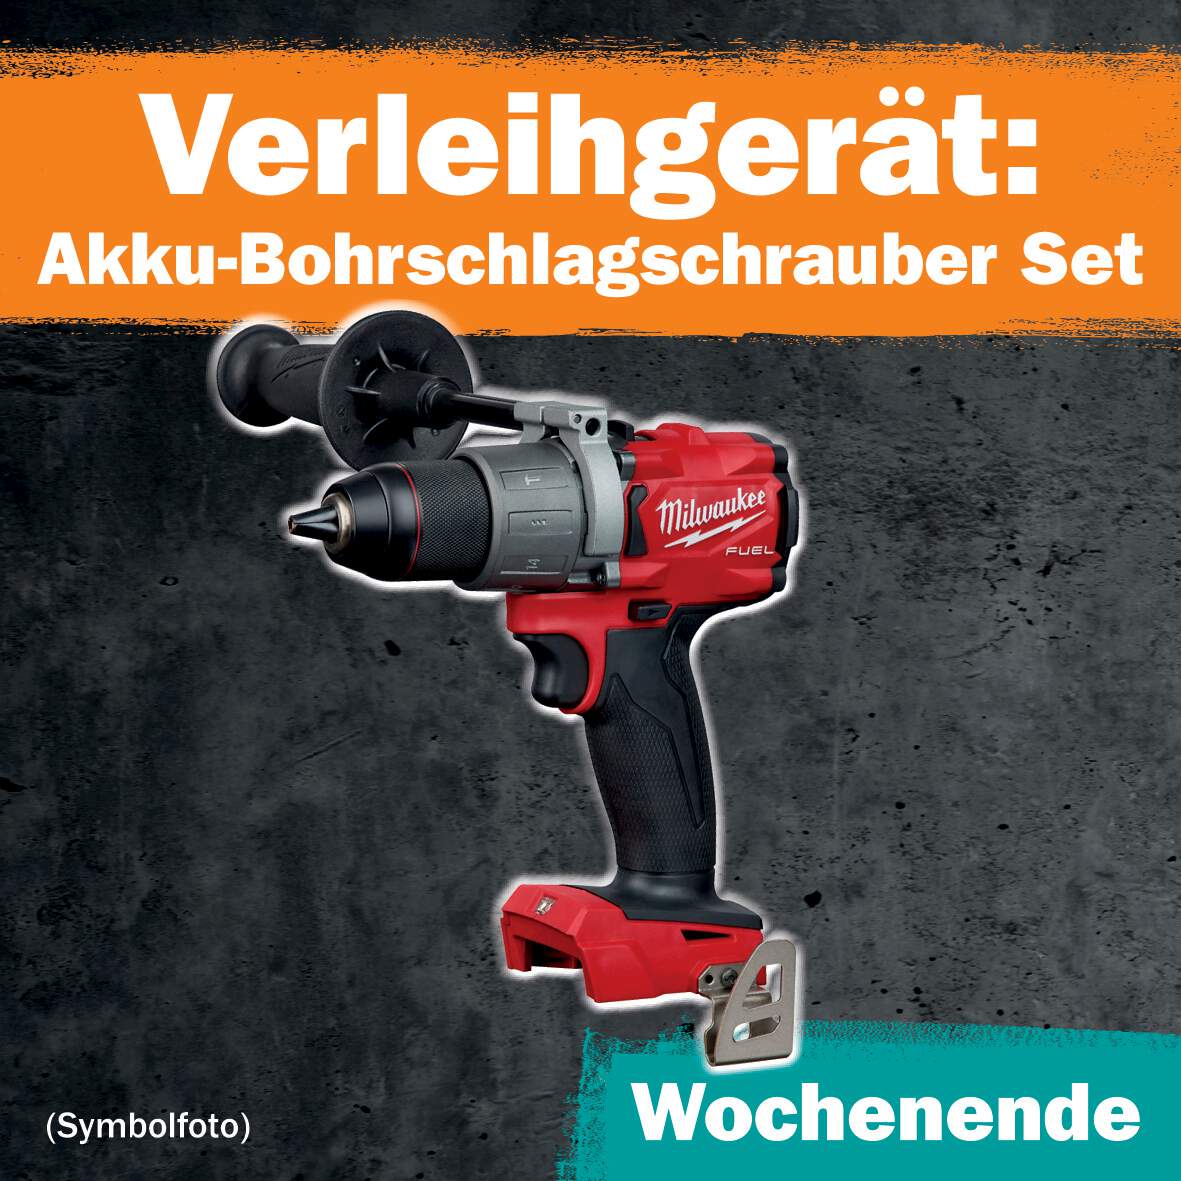 1288682 - Akku-Bohrschlagschrauber Set 1 Wochenende Leihdauer